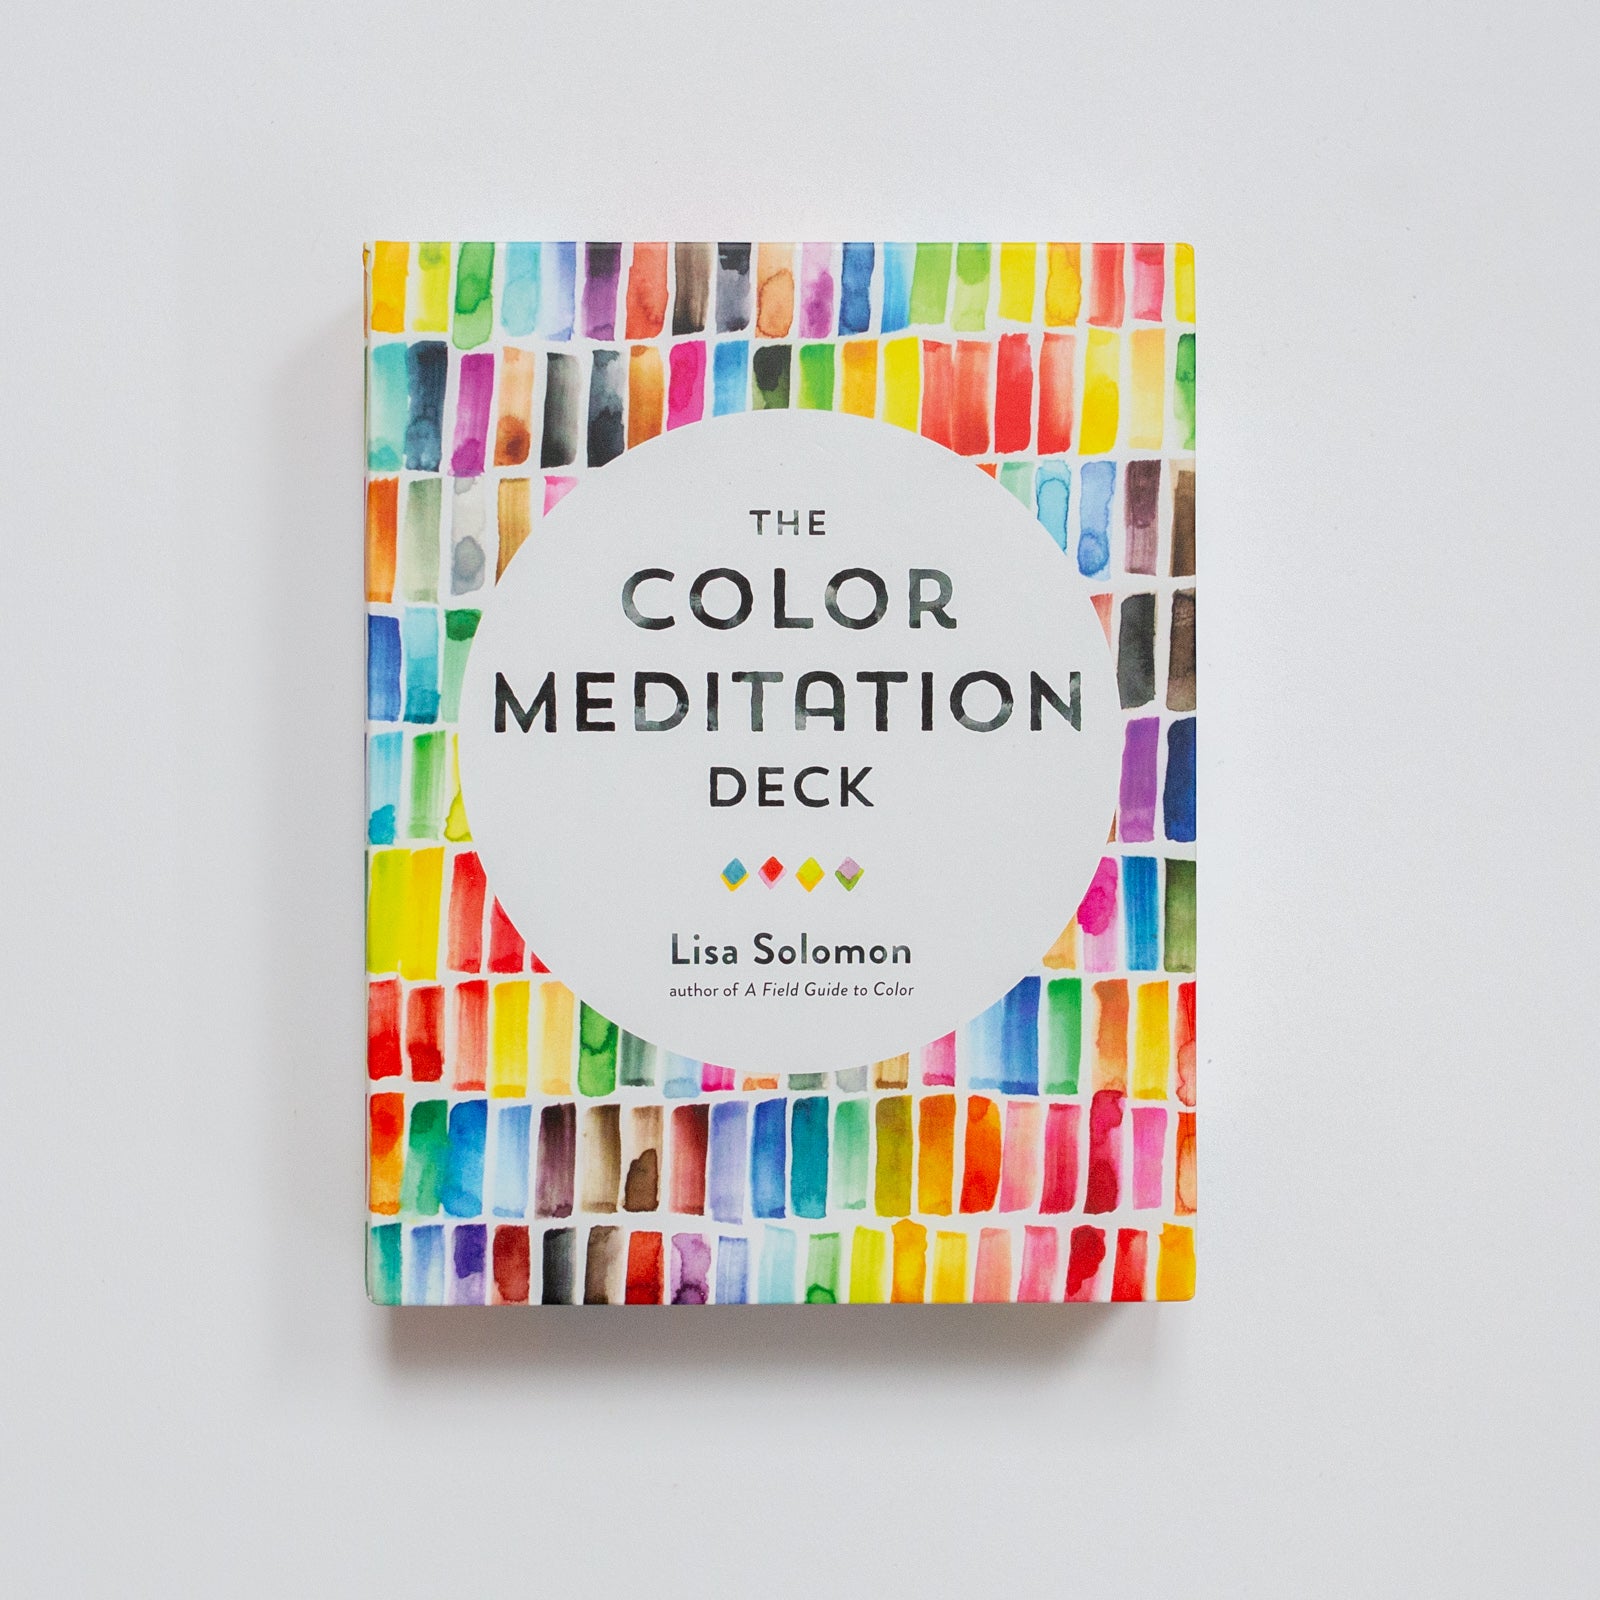 The Color Meditation Deck by Lisa Solomon